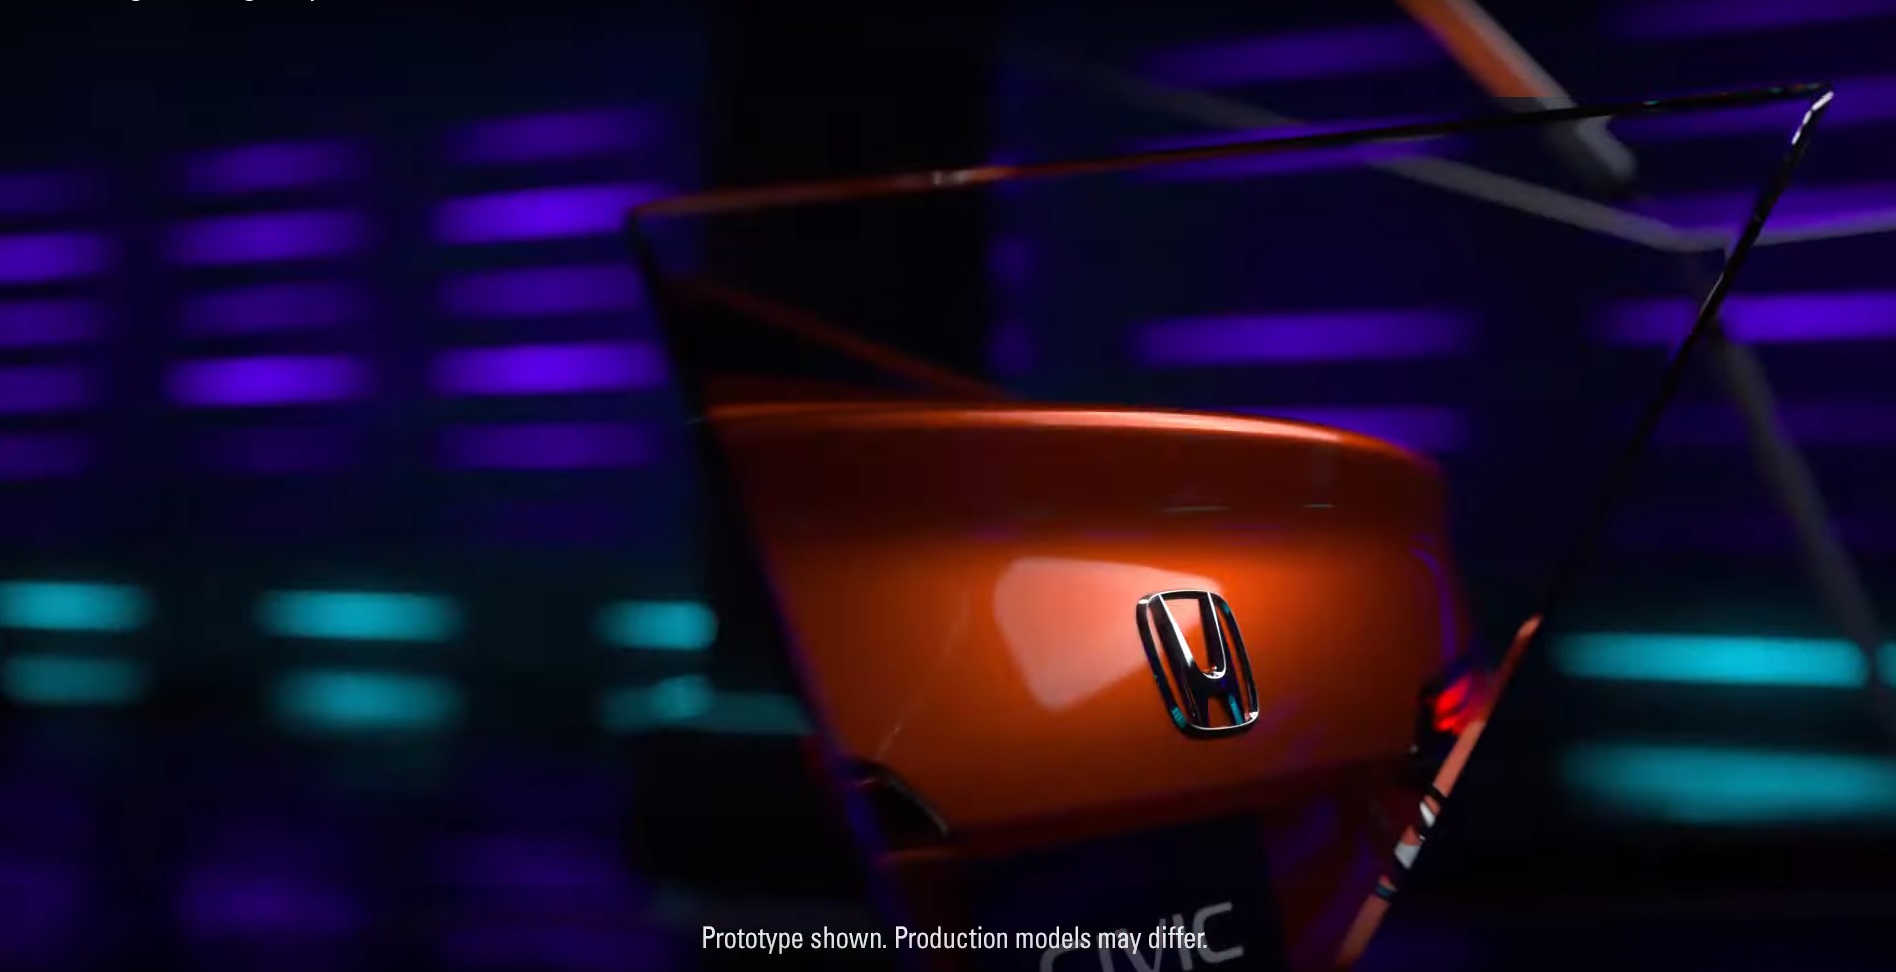 2022 Honda Civic Sedan resim galerisi (15.11.2020)